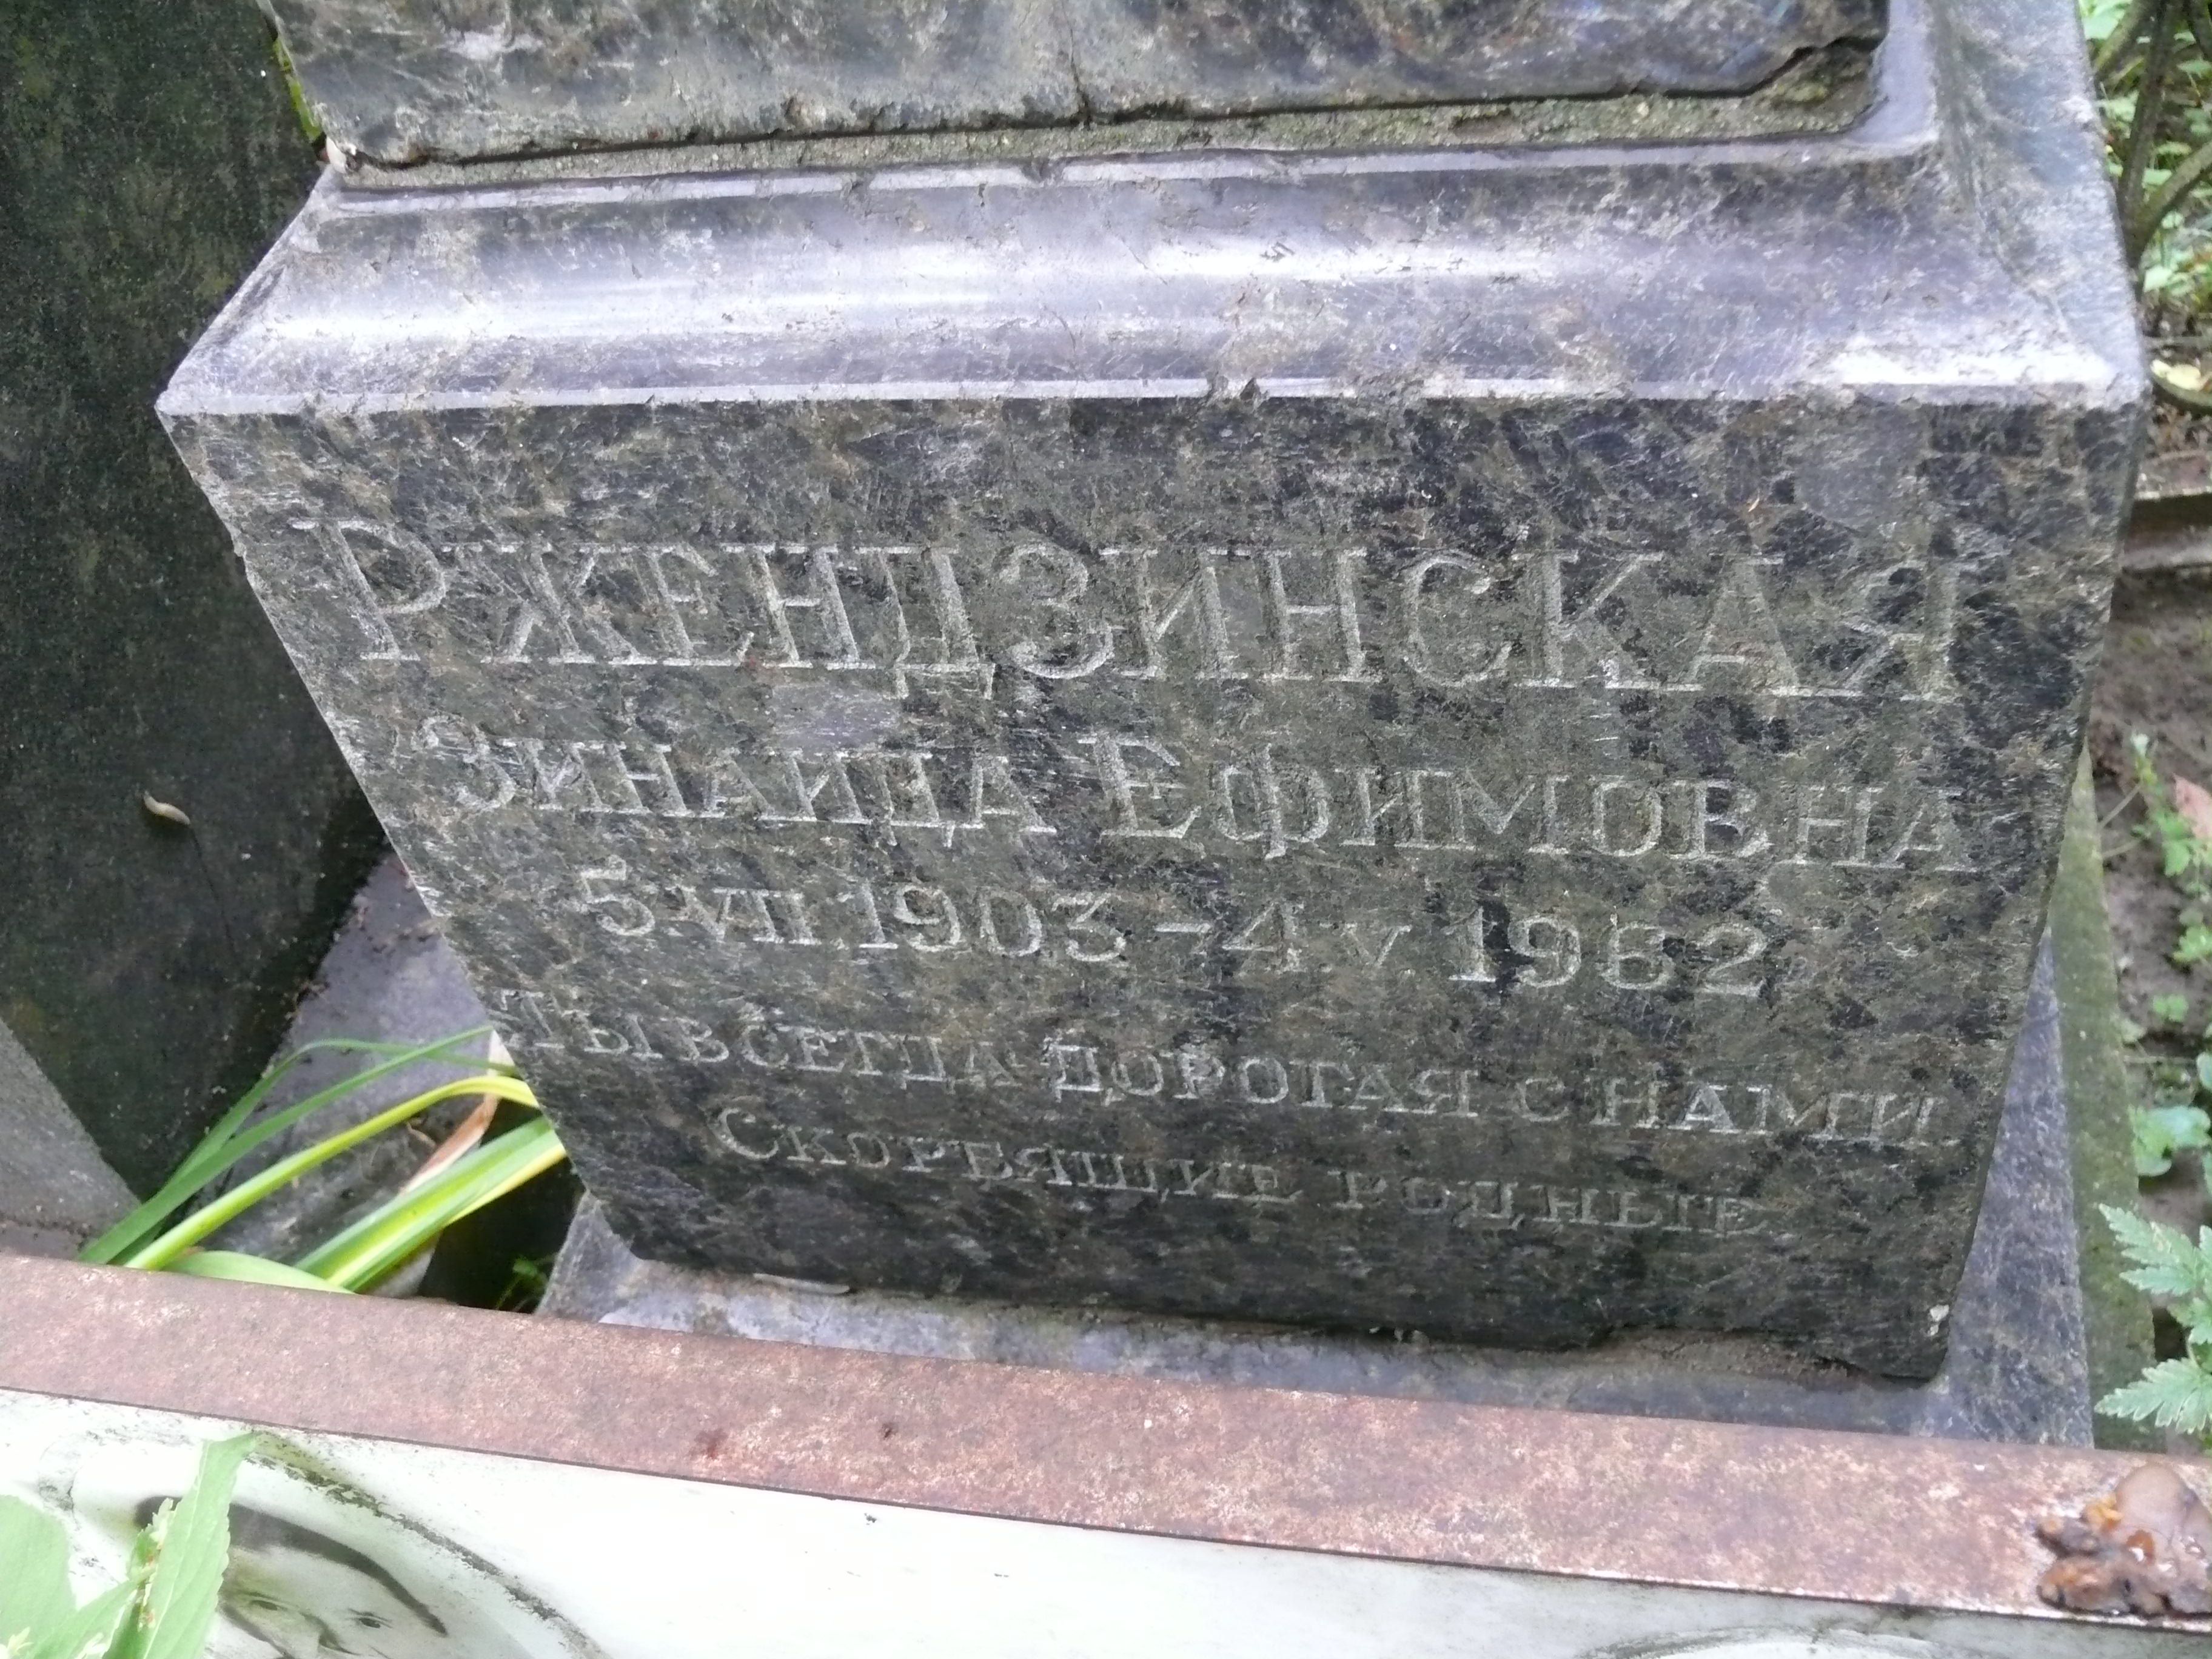 Inscription from the gravestone of Jozef Ržendzinski